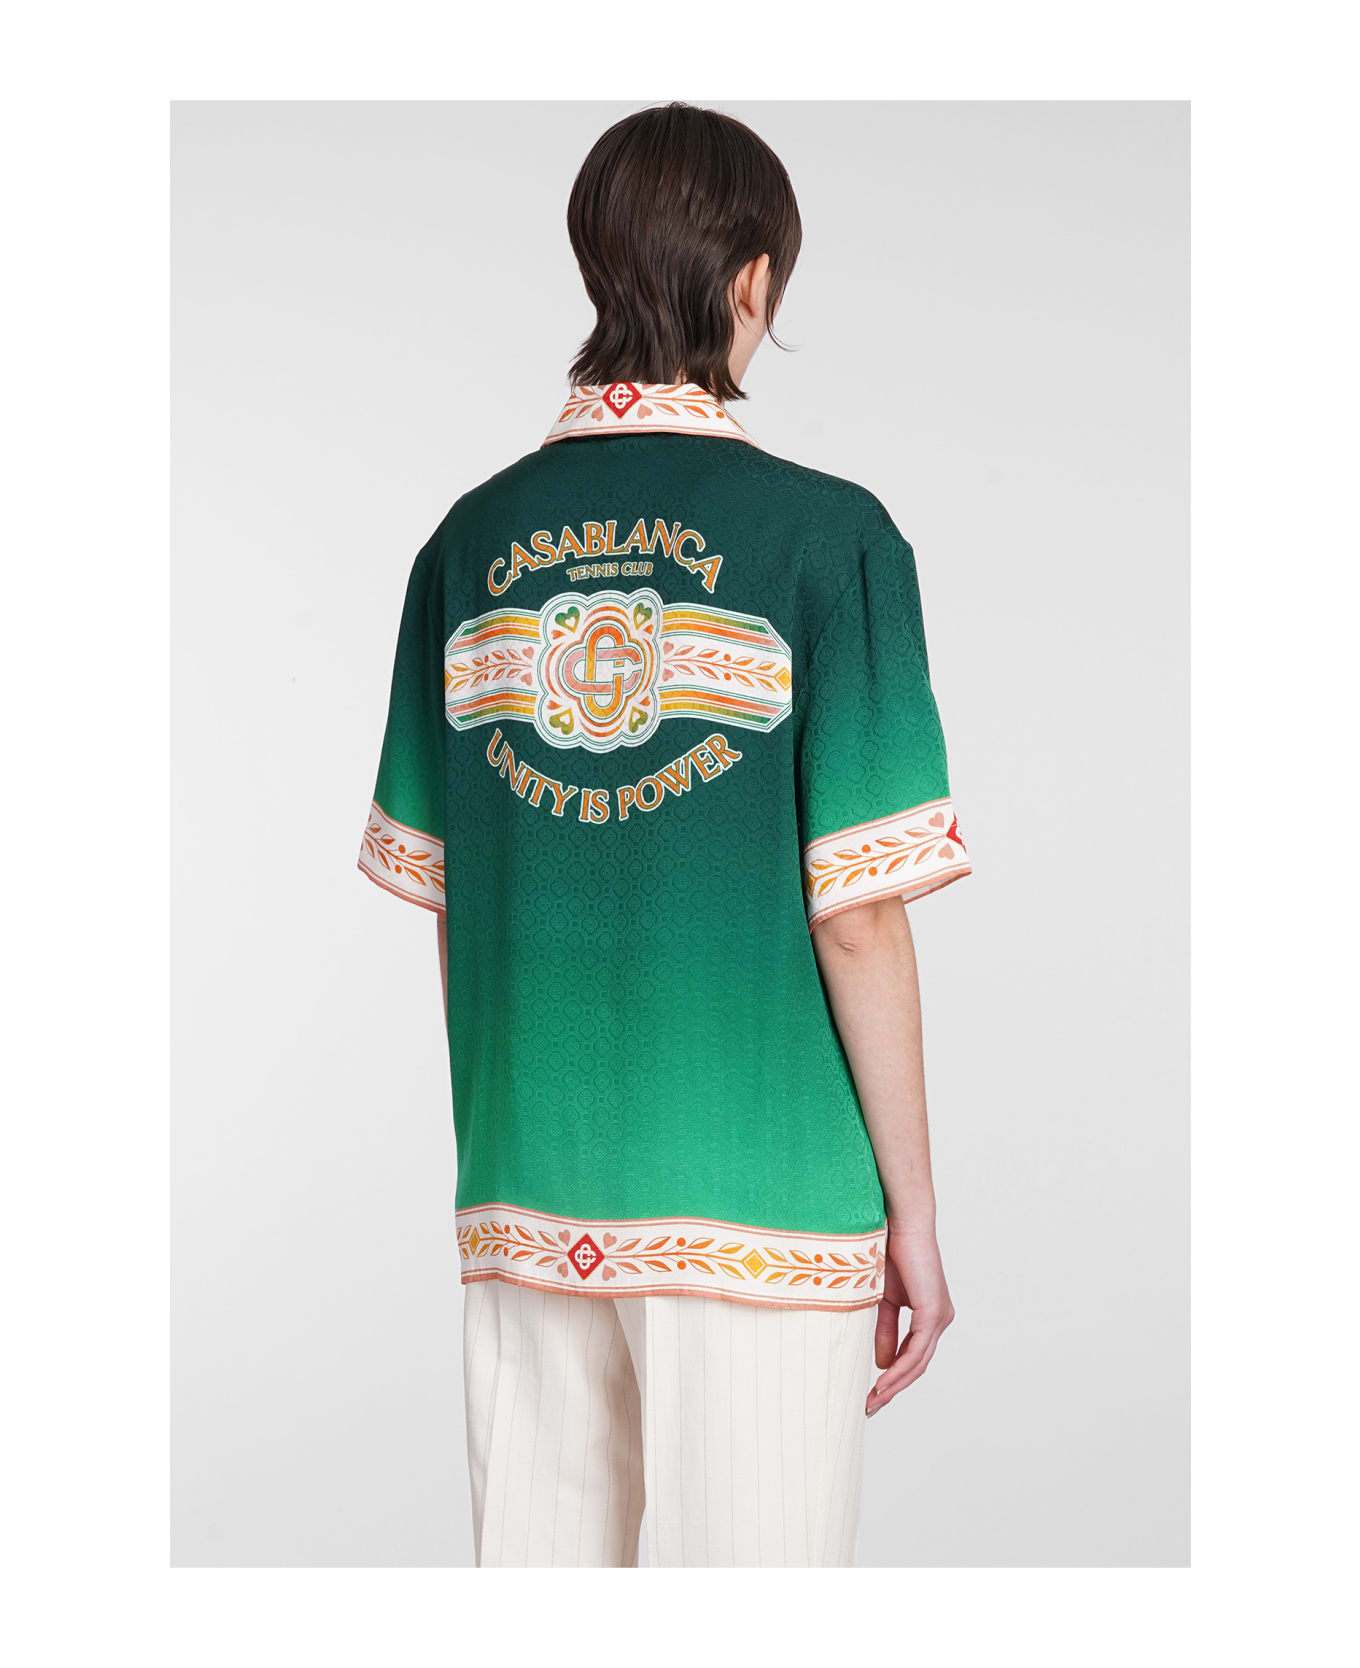 Casablanca Shirt In Green Silk - UNITY IS POWER